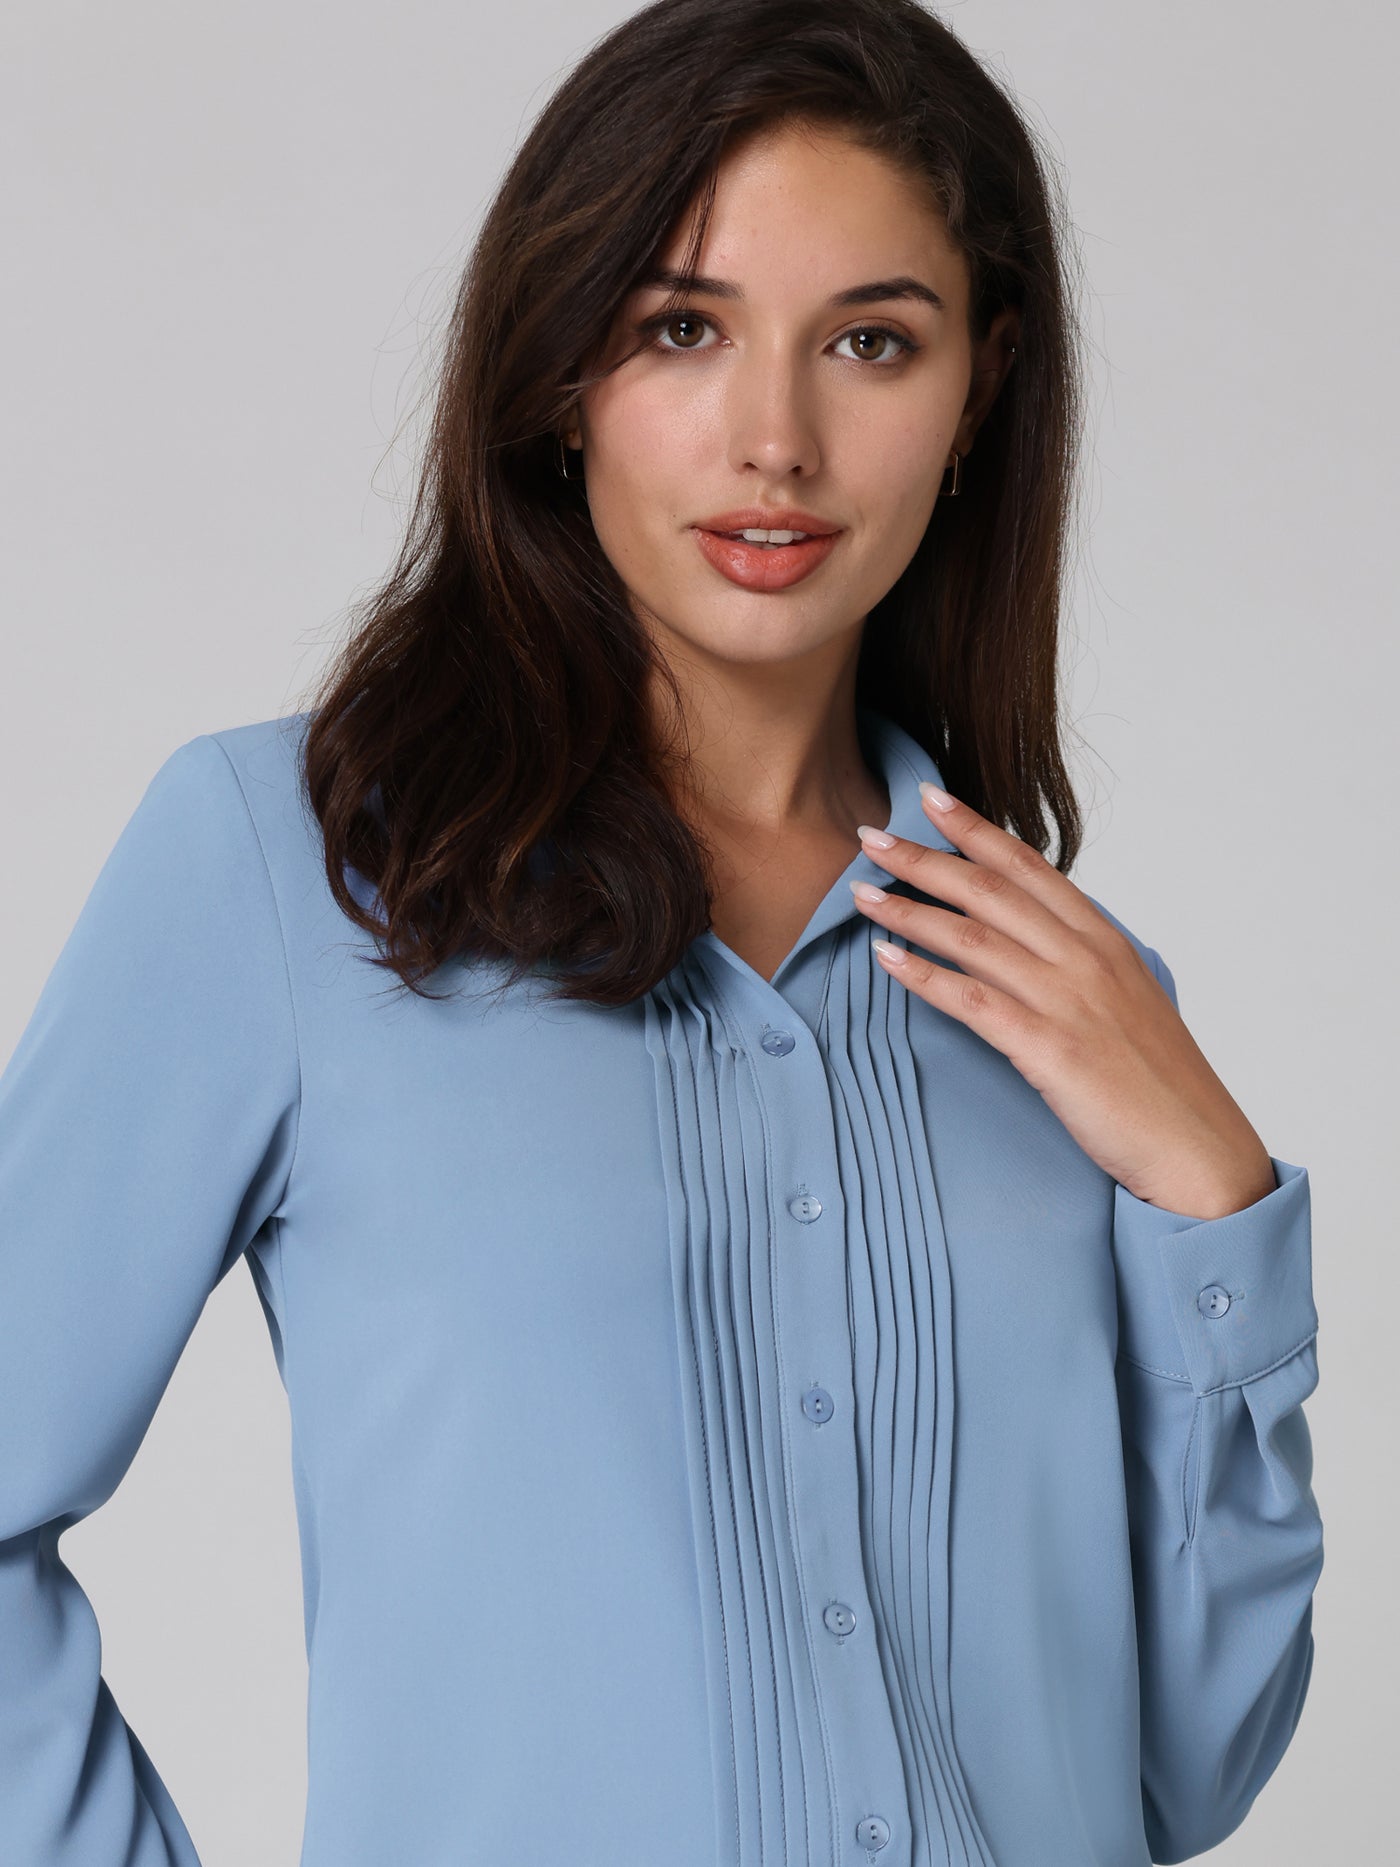 Bublédon Women's Work Shirt Long Sleeve Pleated Button Down Blouse